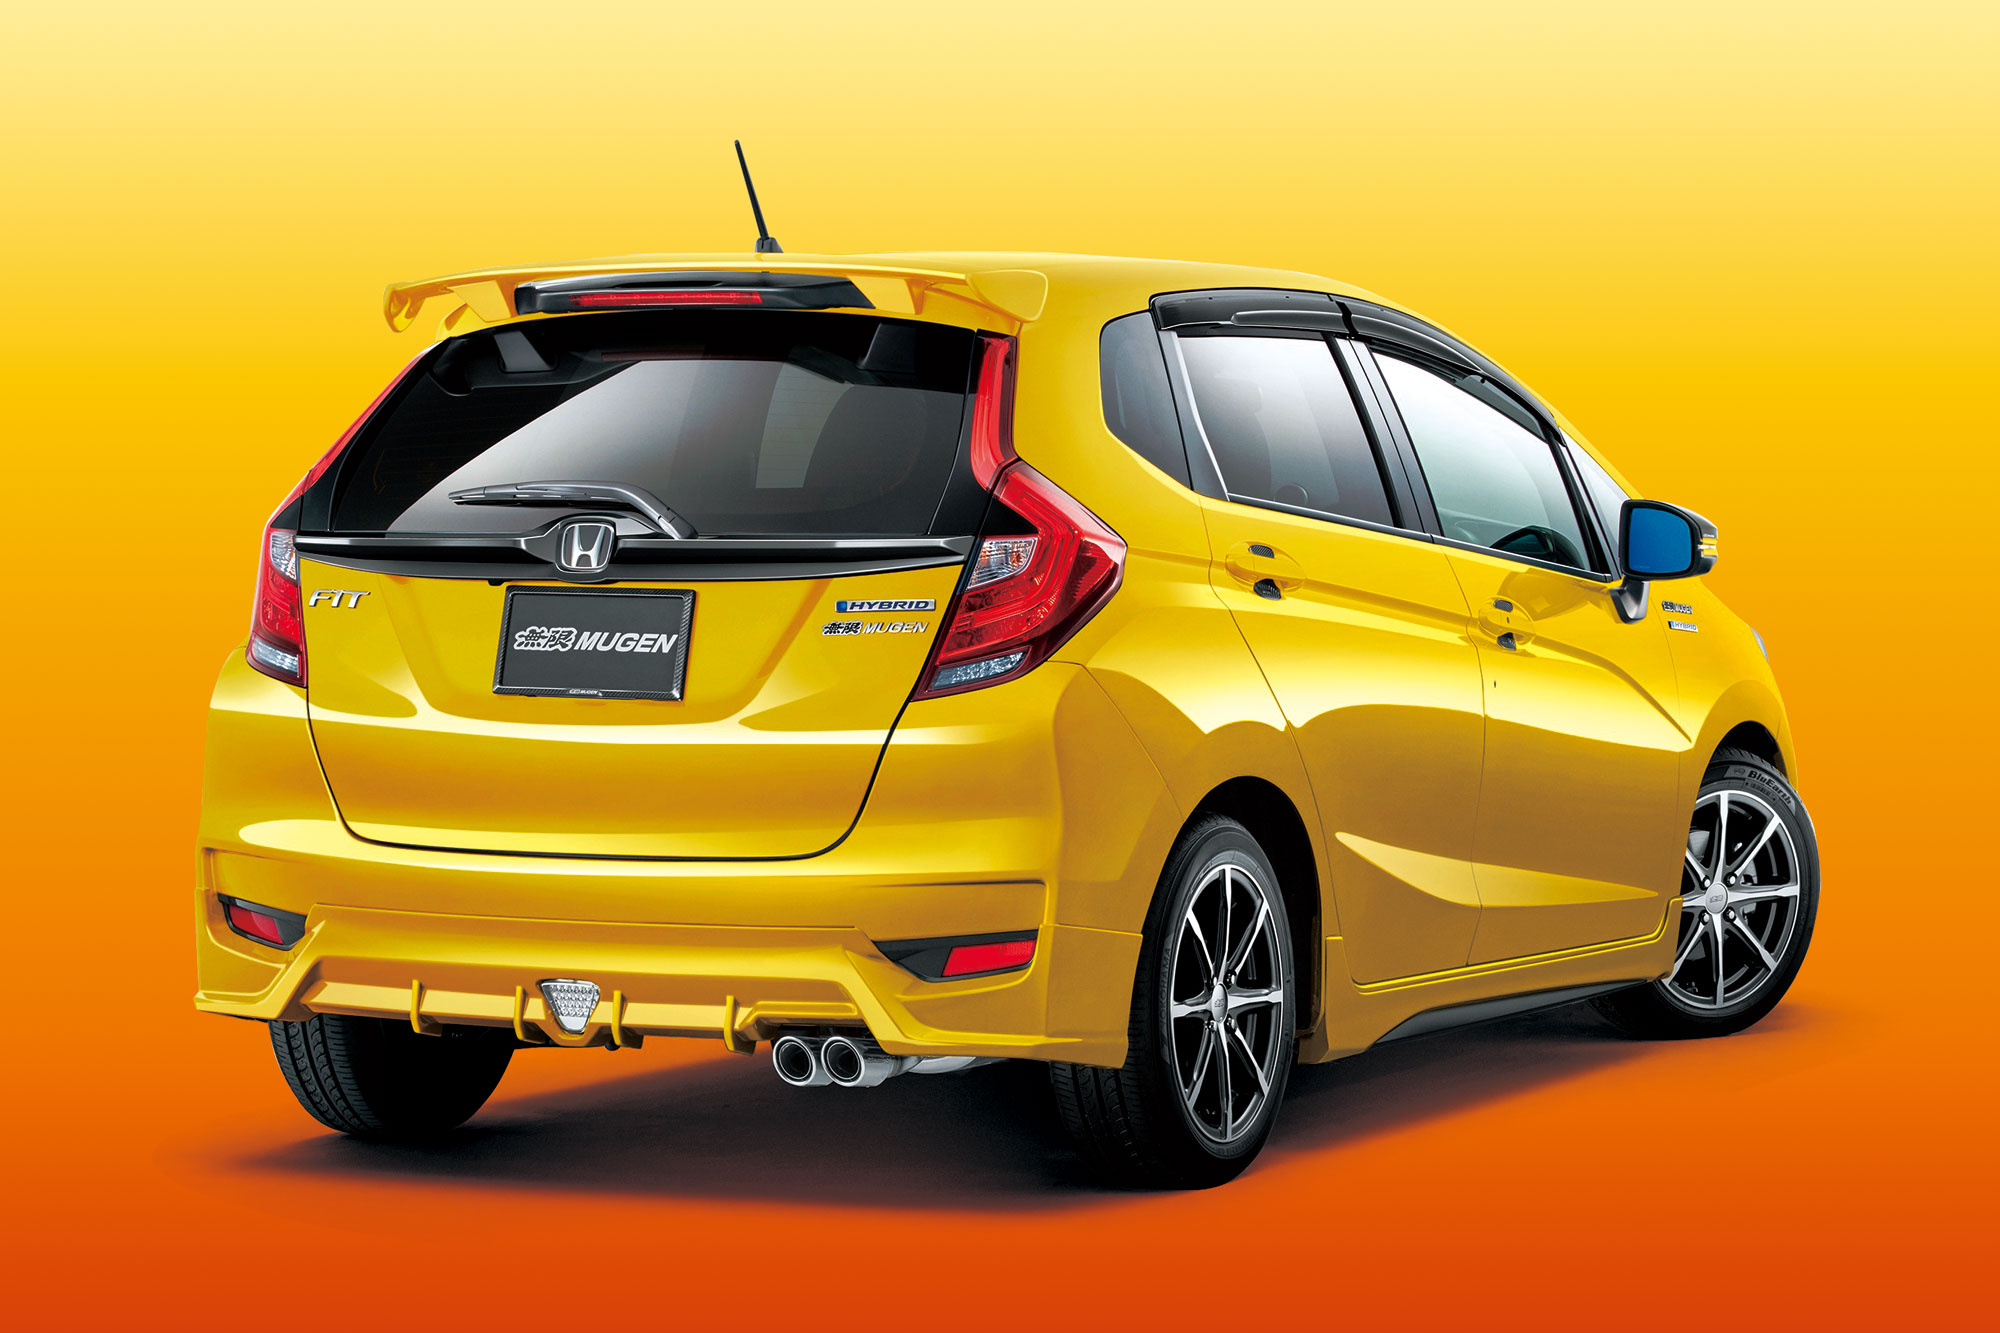 Honda Mugen Honda Honda Fit Car Japanese Cars Orange Background Yellow Background Rear View Yellow C 2000x1333